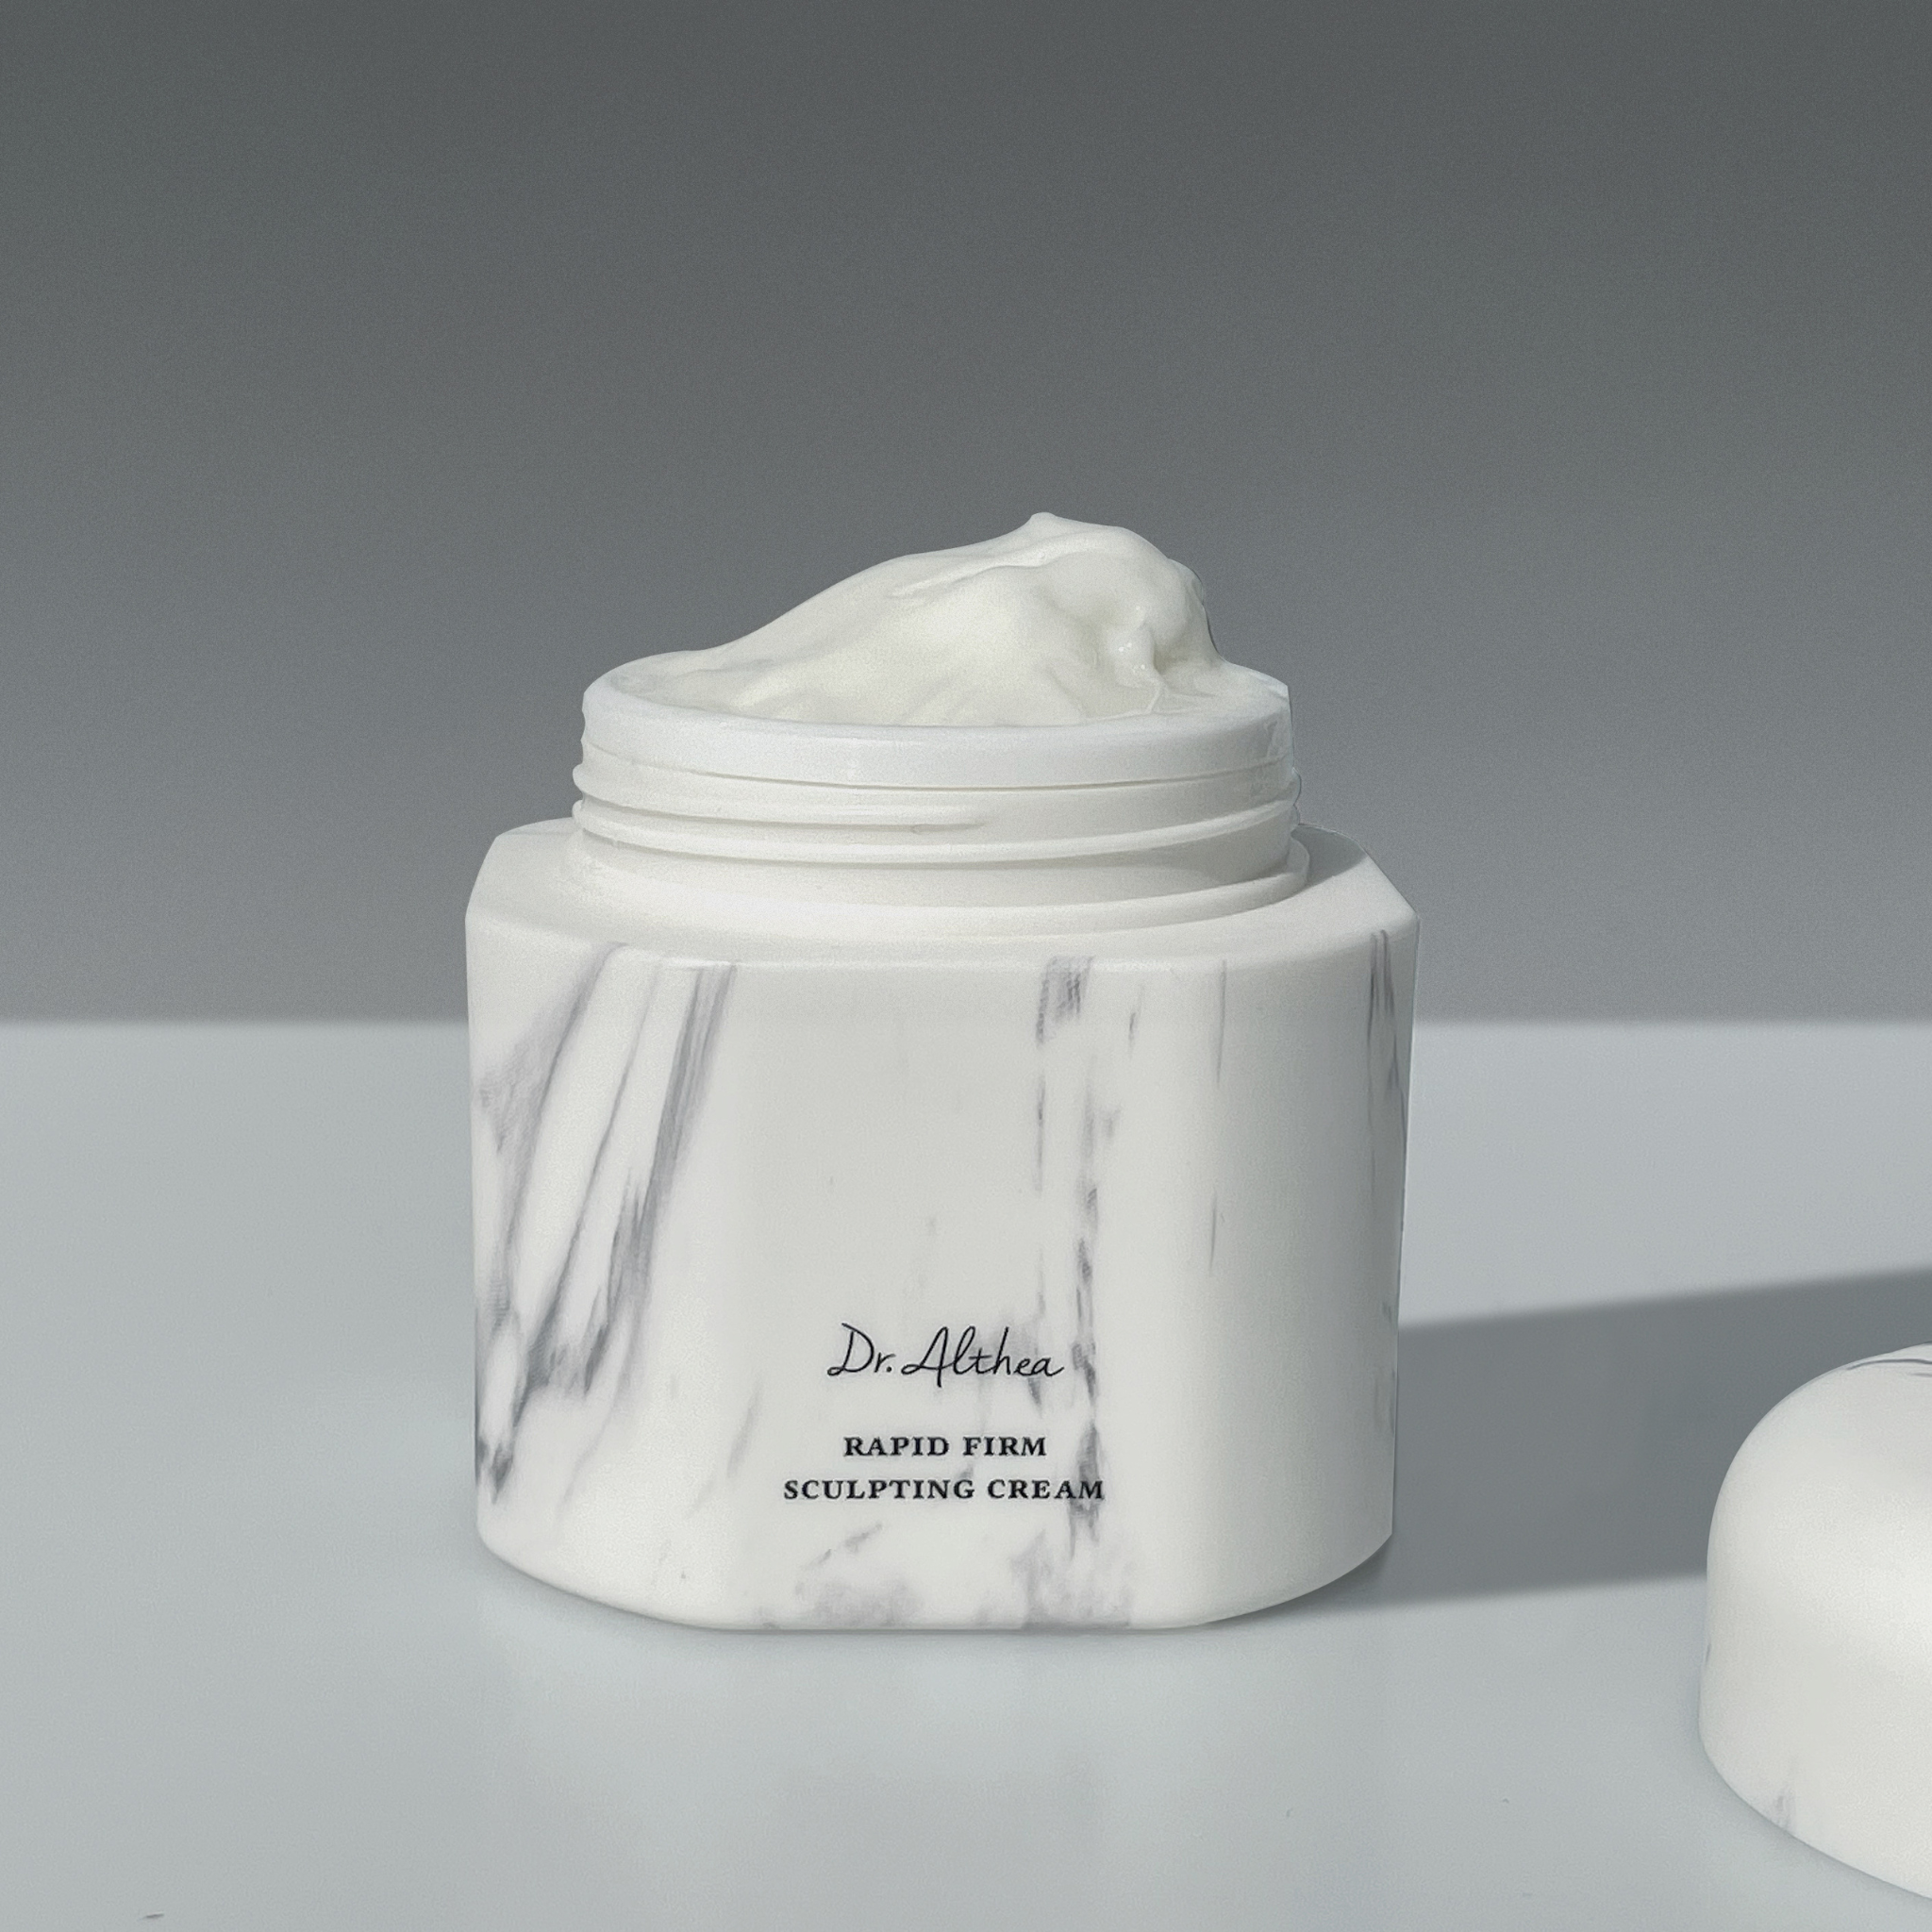 DR. ALTHEA Rapid Firm Sculpting Cream (45ml) - inside